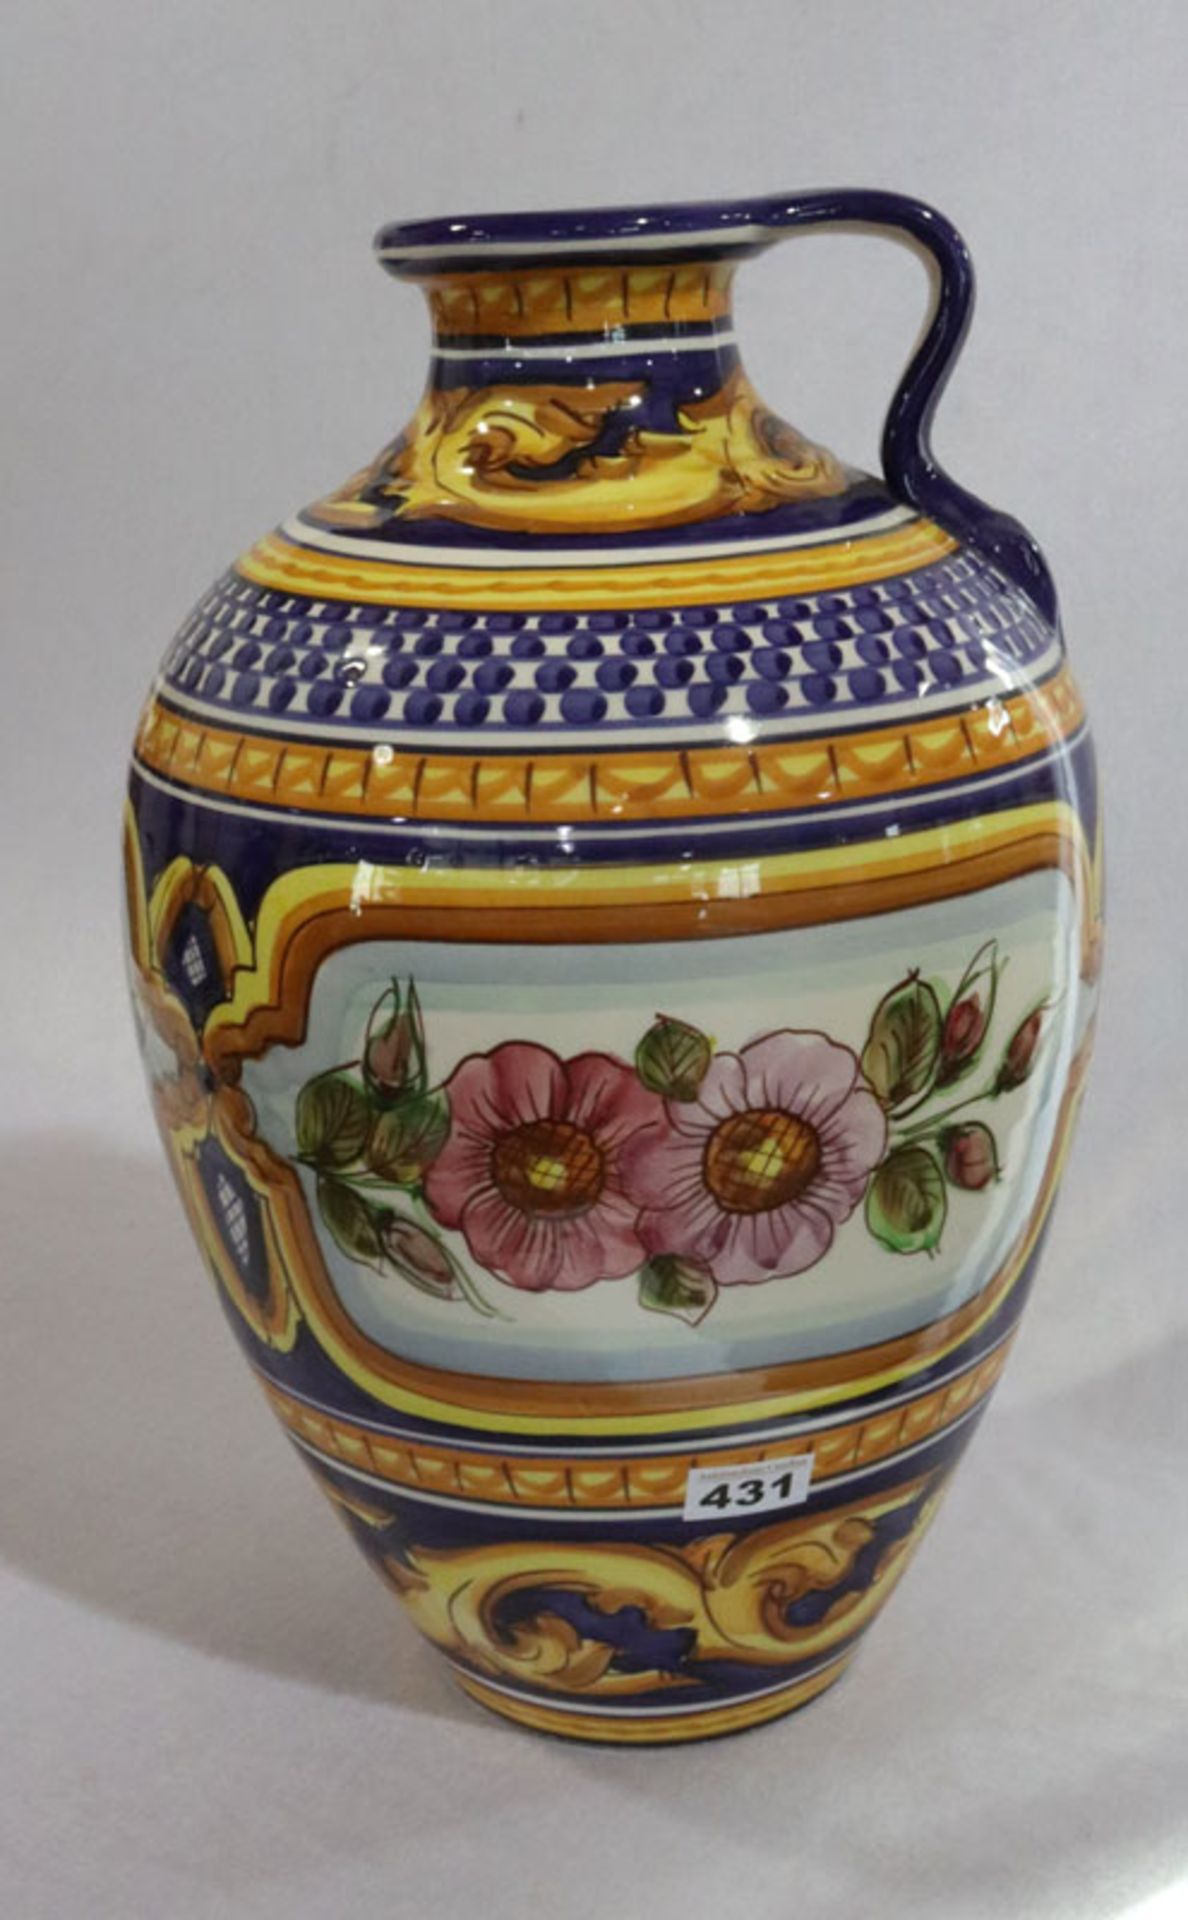 Großer Keramik Henkelkrug mit buntem Dekor, H 47 cm, D ca. 30 cm, Gebrauchsspuren